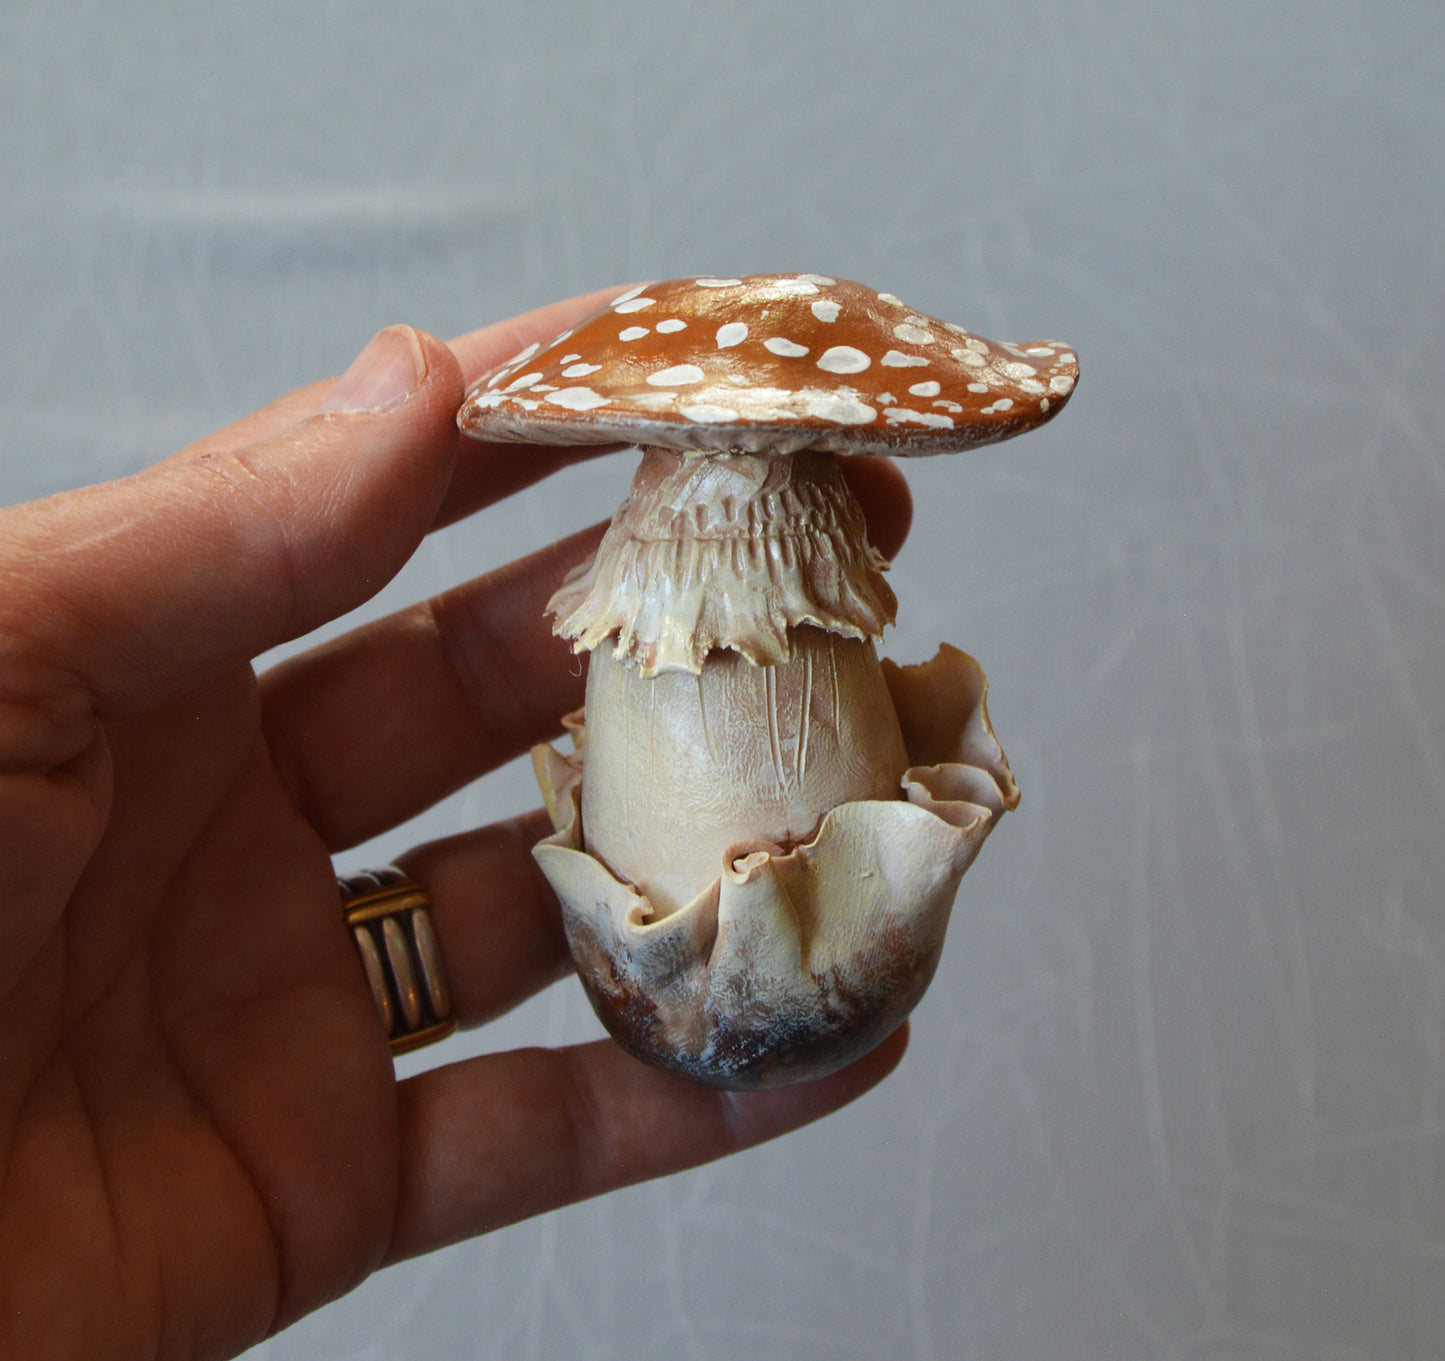 Realistic brown cap mushroom "Amanita Muscaria" decor art object